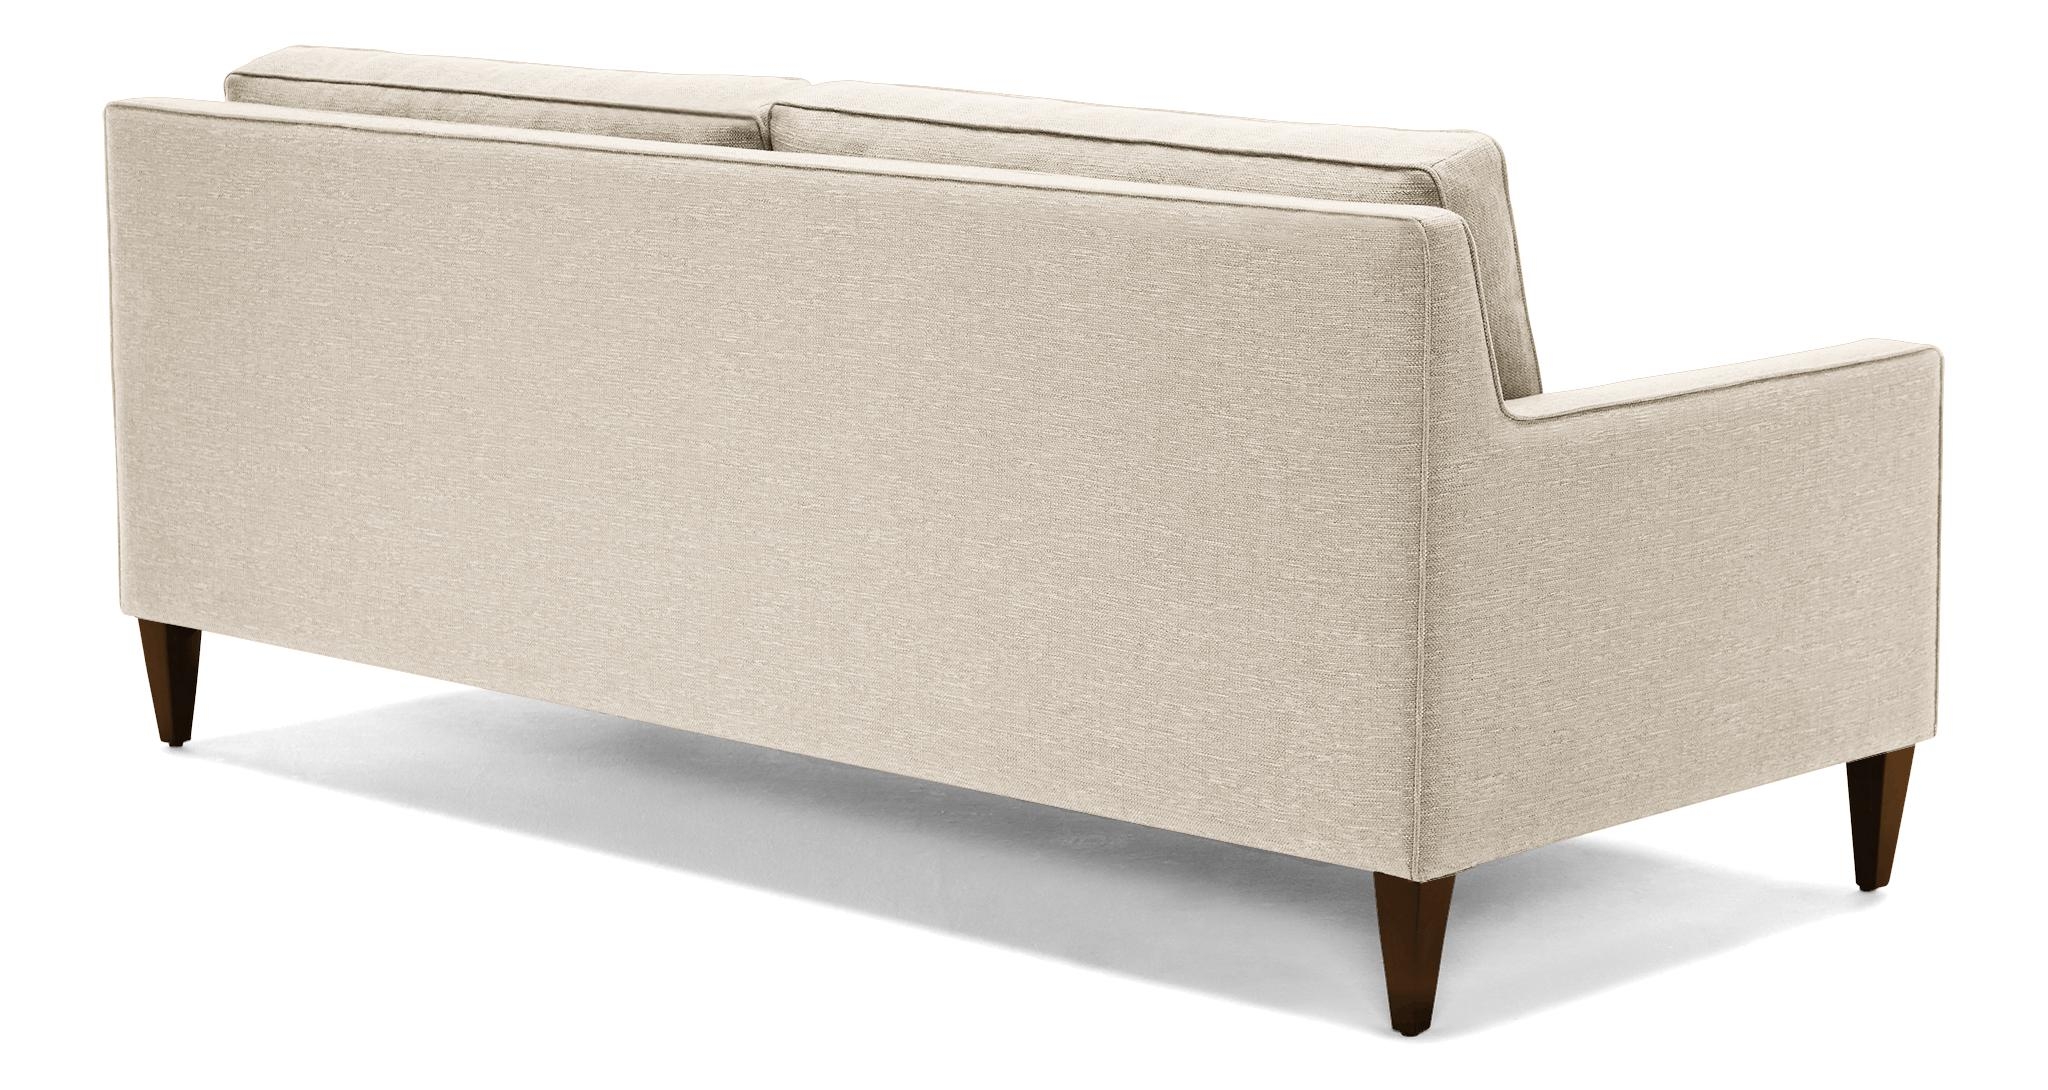 Beige/White Levi Mid Century Modern Sofa - Merit Dove - Mocha - Image 3